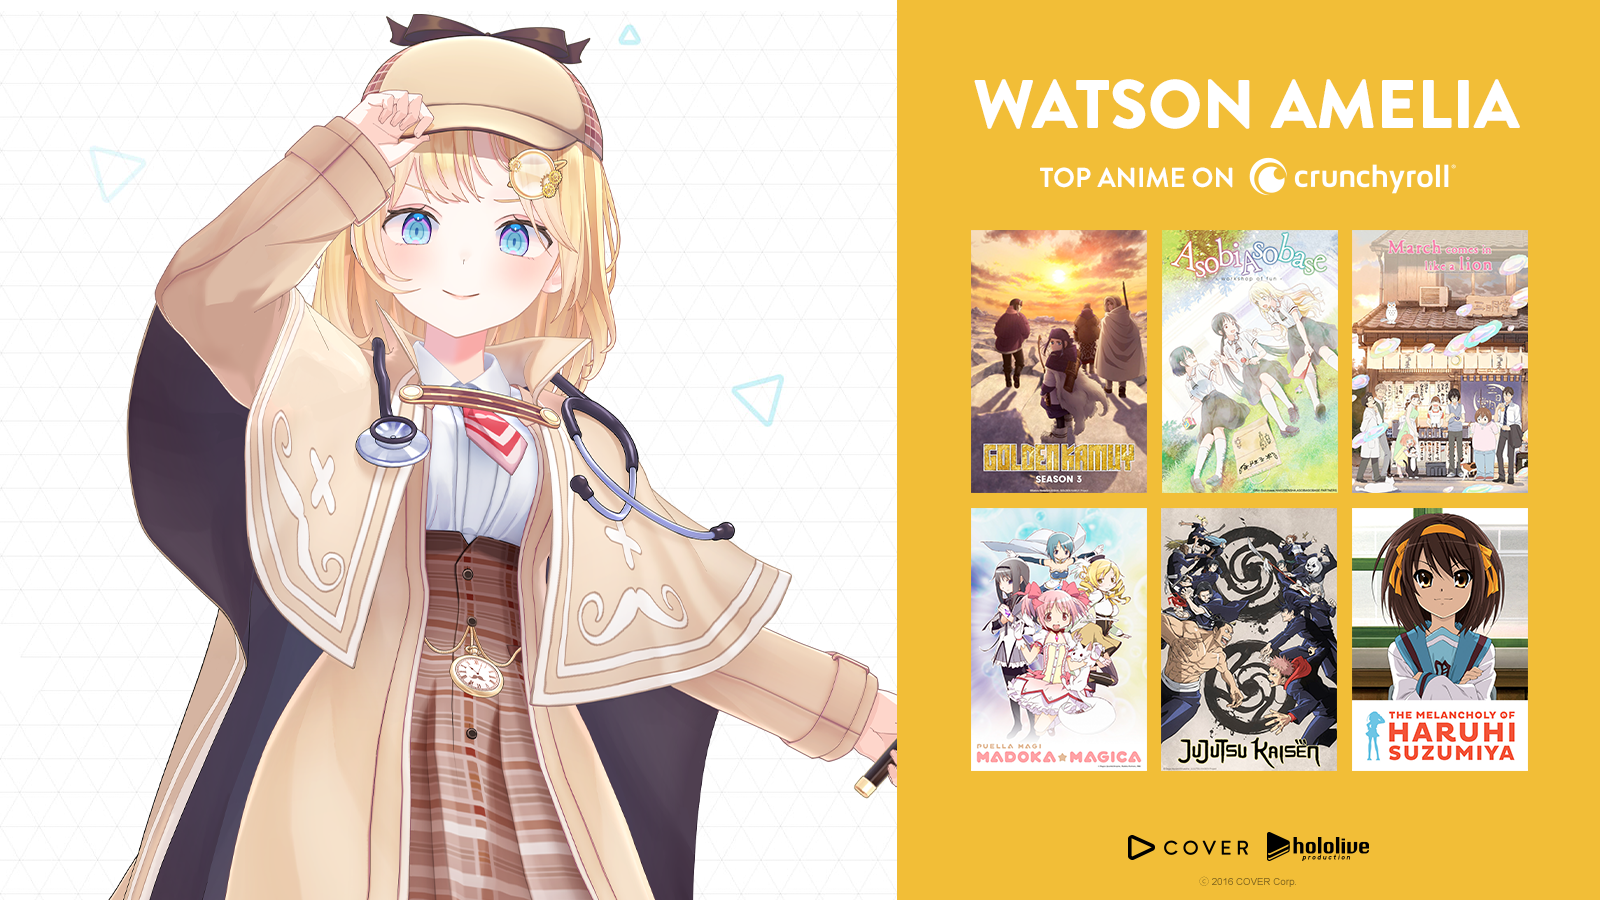 #RECS: VTuber Watson Amelia's Top 10 Favorite Anime